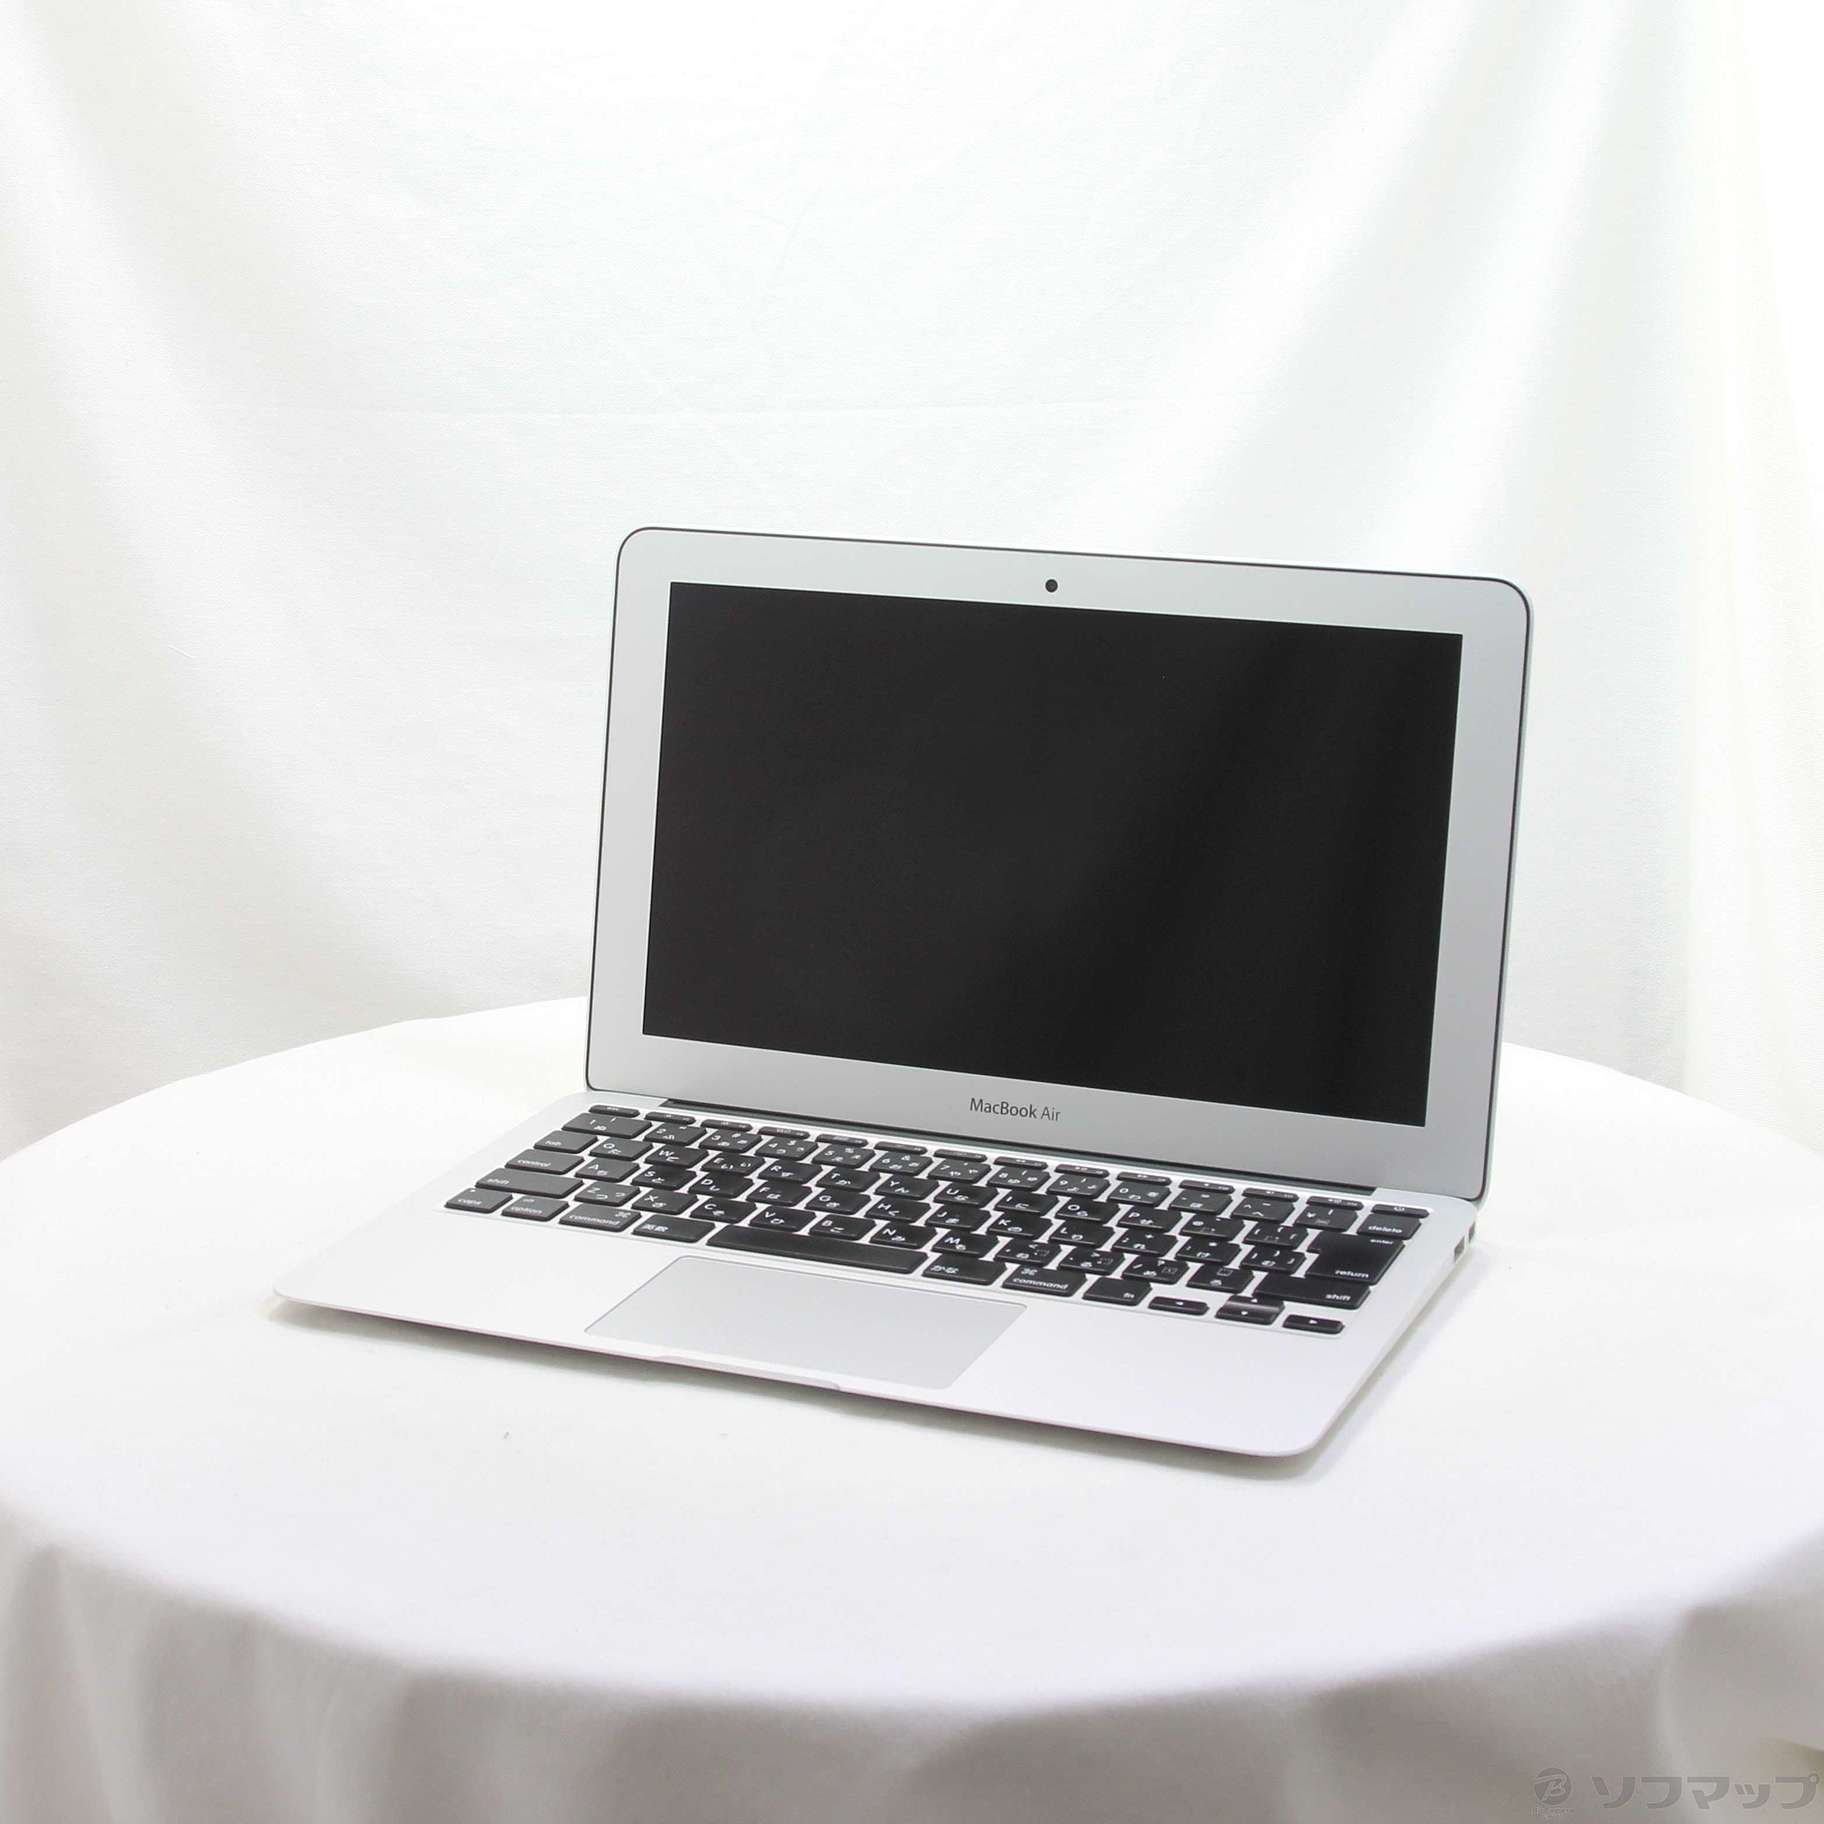 2015 Apple MacBook Air 11.6 Inch Laptops for sale - eBay